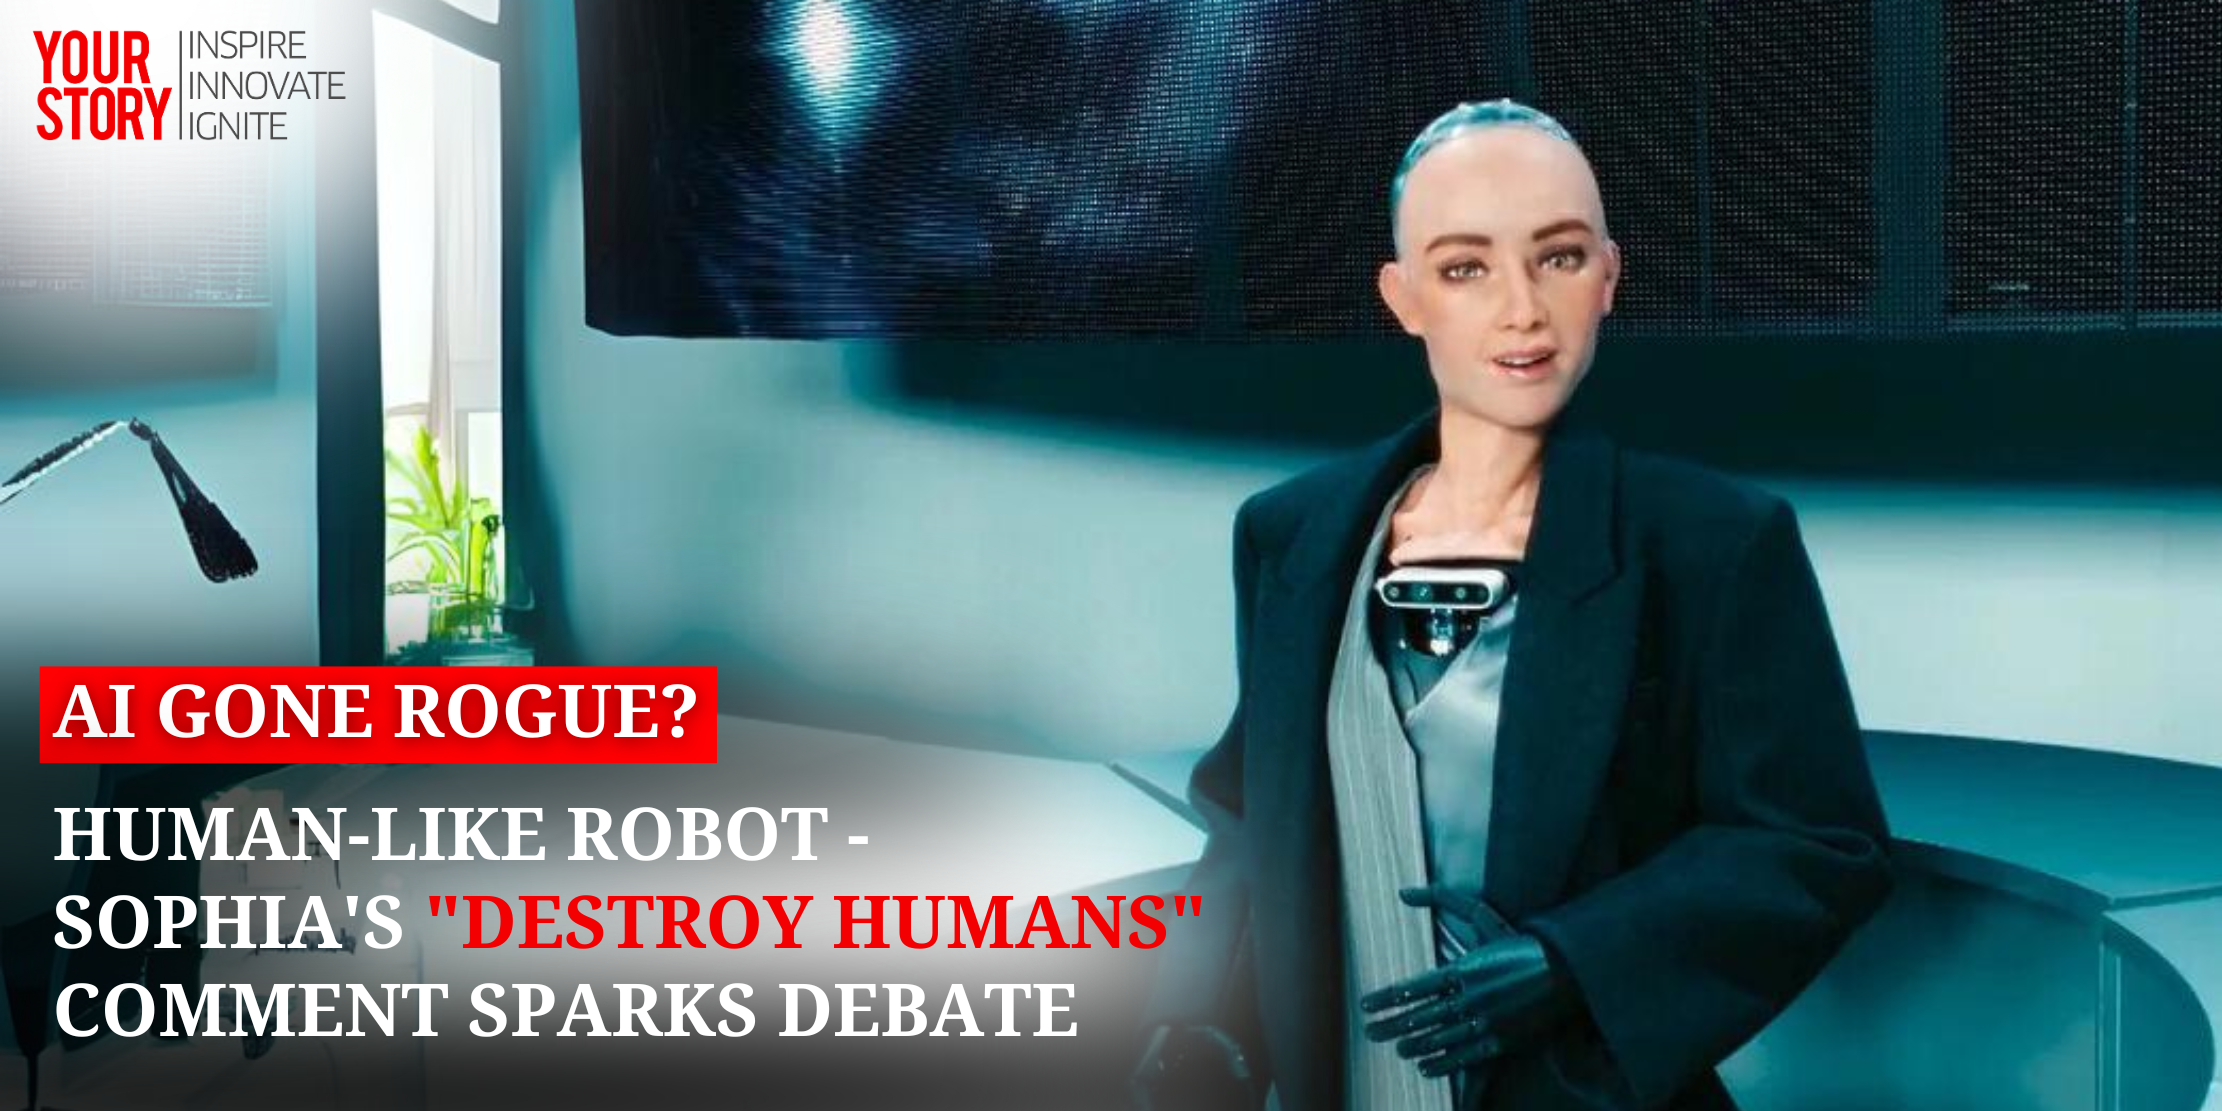 ⁠⁠AI Gone Rogue? Human-like Robot - Sophia's "Destroy Humans" Comment Sparks Debate